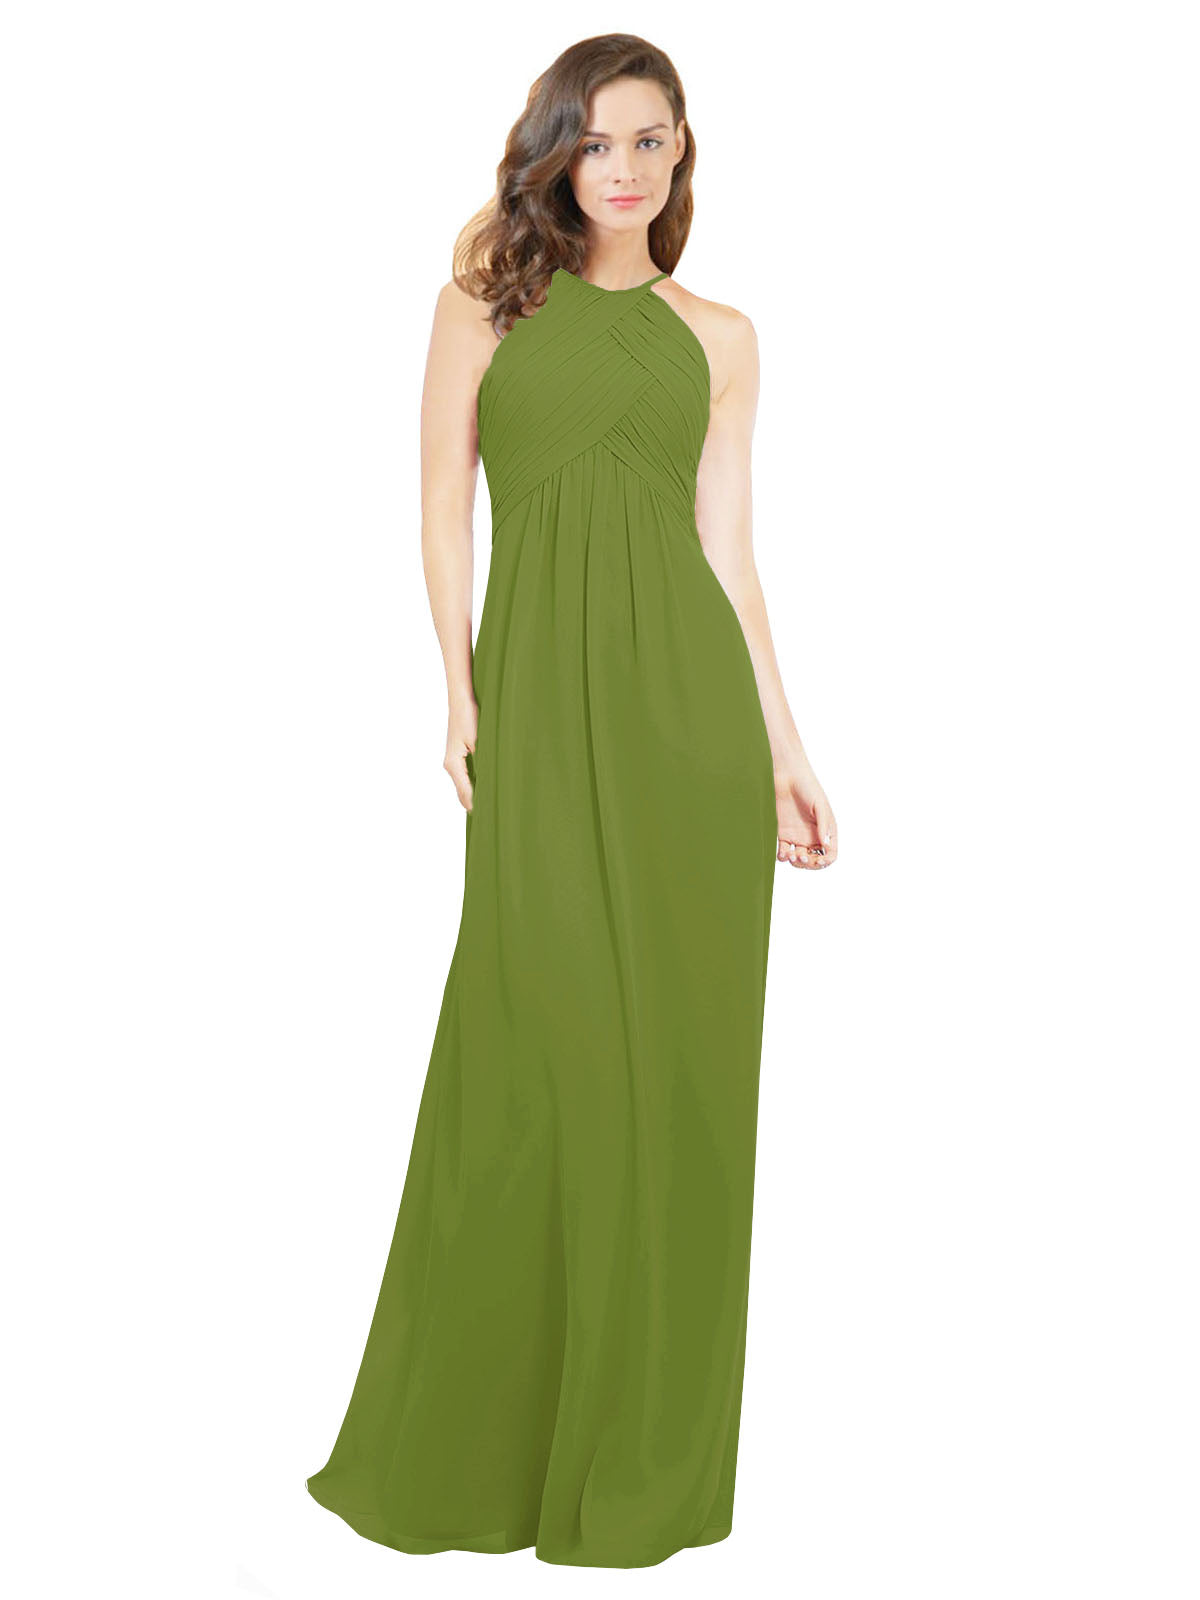 Olive Green A-Line Halter Sleeveless Long Bridesmaid Dress Robyn